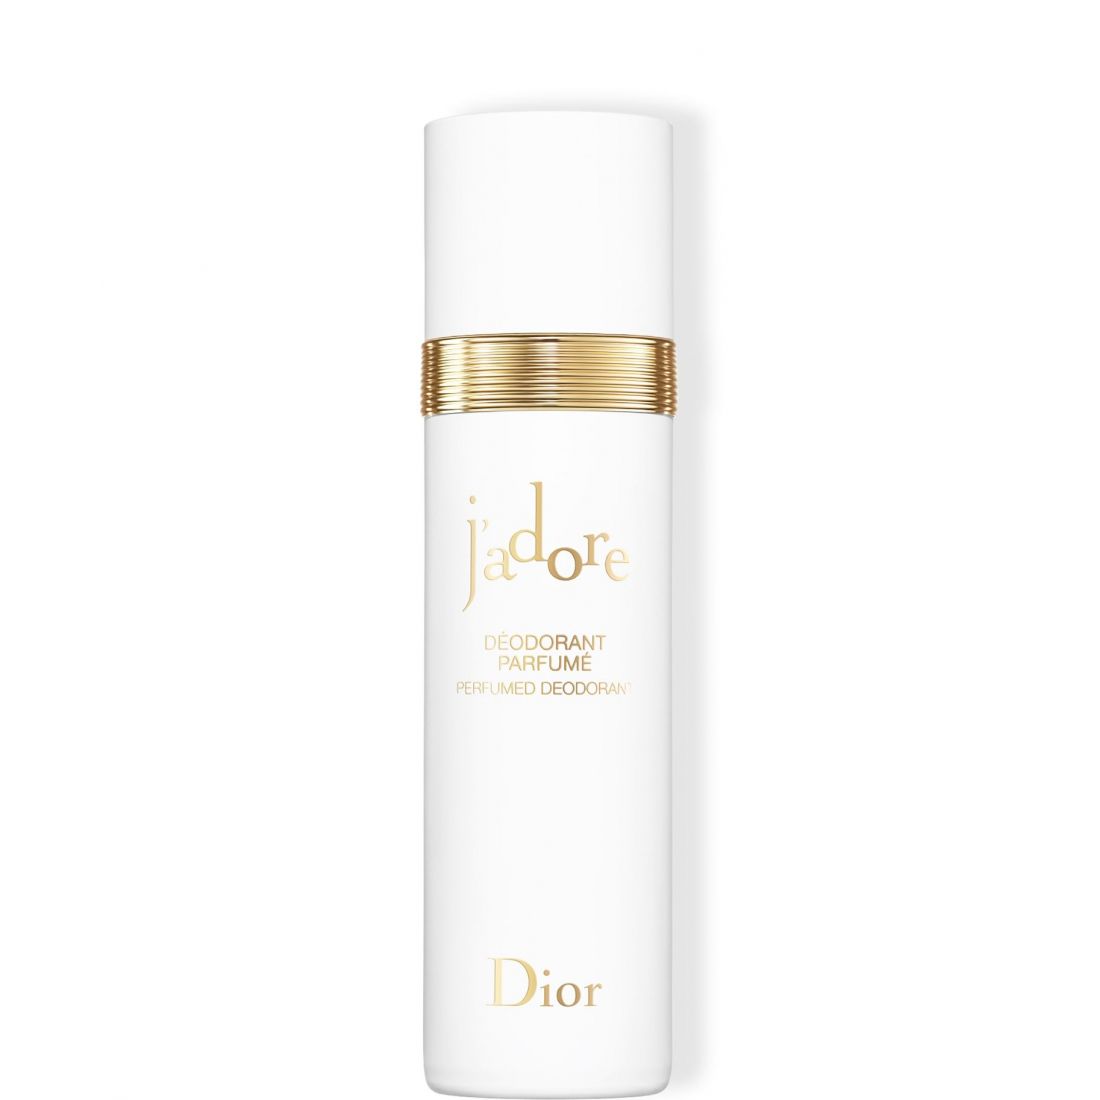 Dior - Déodorant parfumé 'J'Adore' - 100 ml